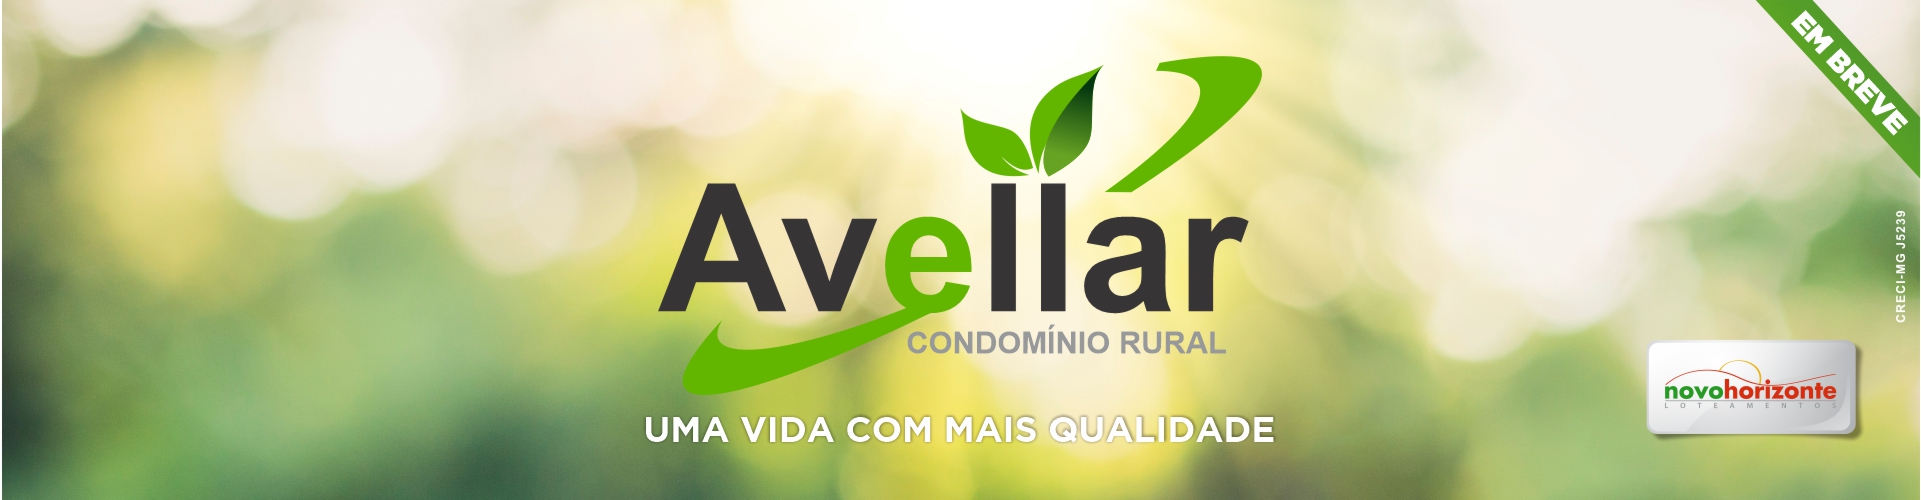 Condomínio Rural Avellar